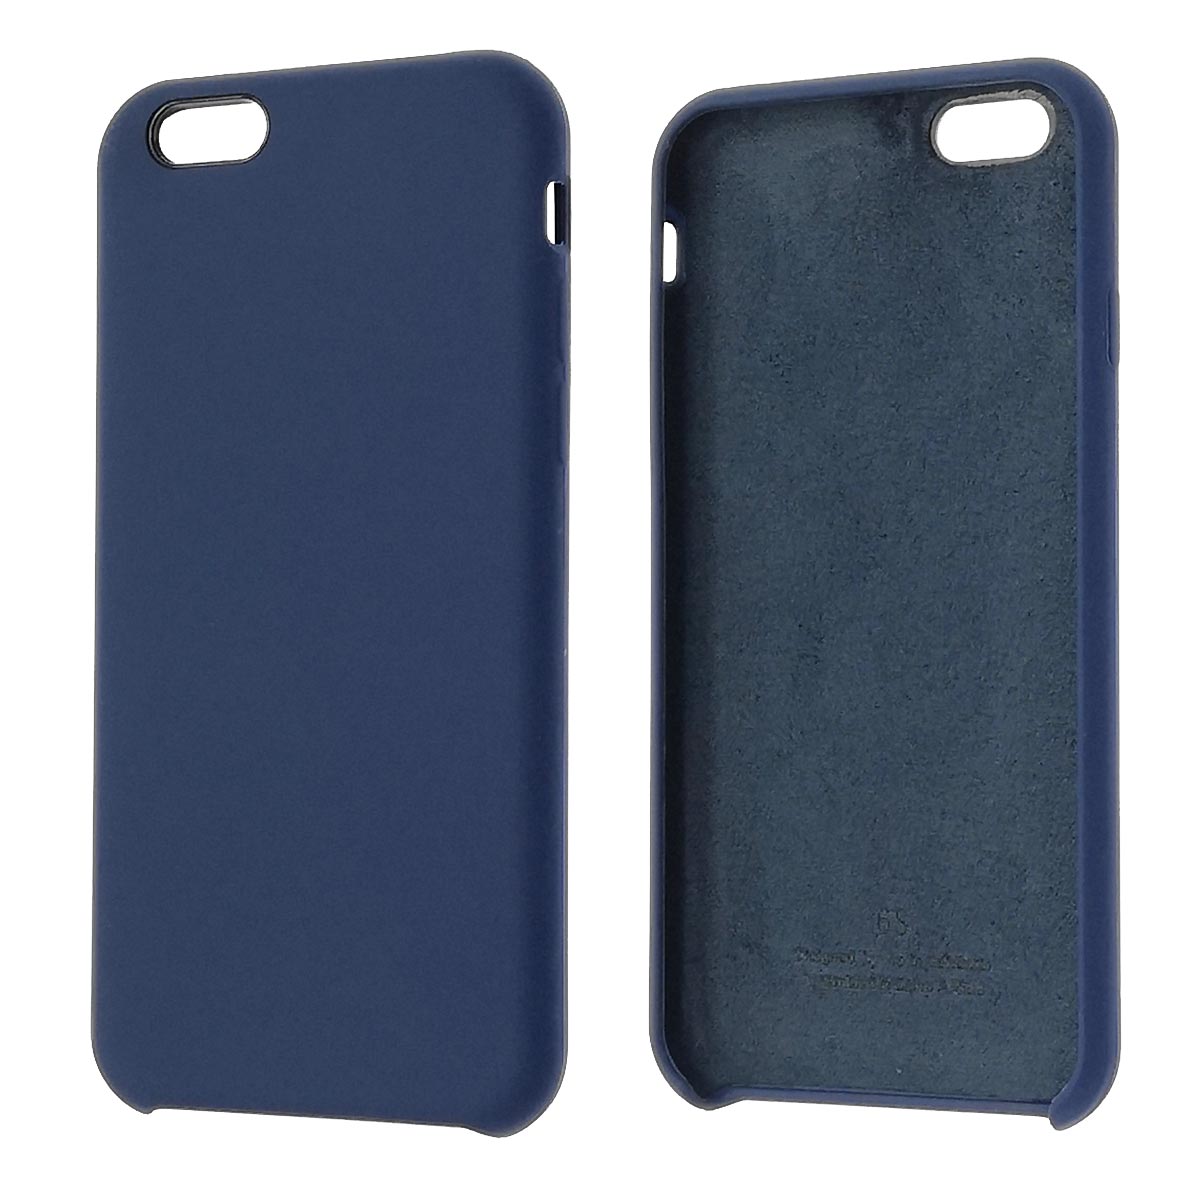 Чехол накладка Silicon Case для APPLE iPhone 6, 6G, 6S, силикон, бархат, цвет черно синий